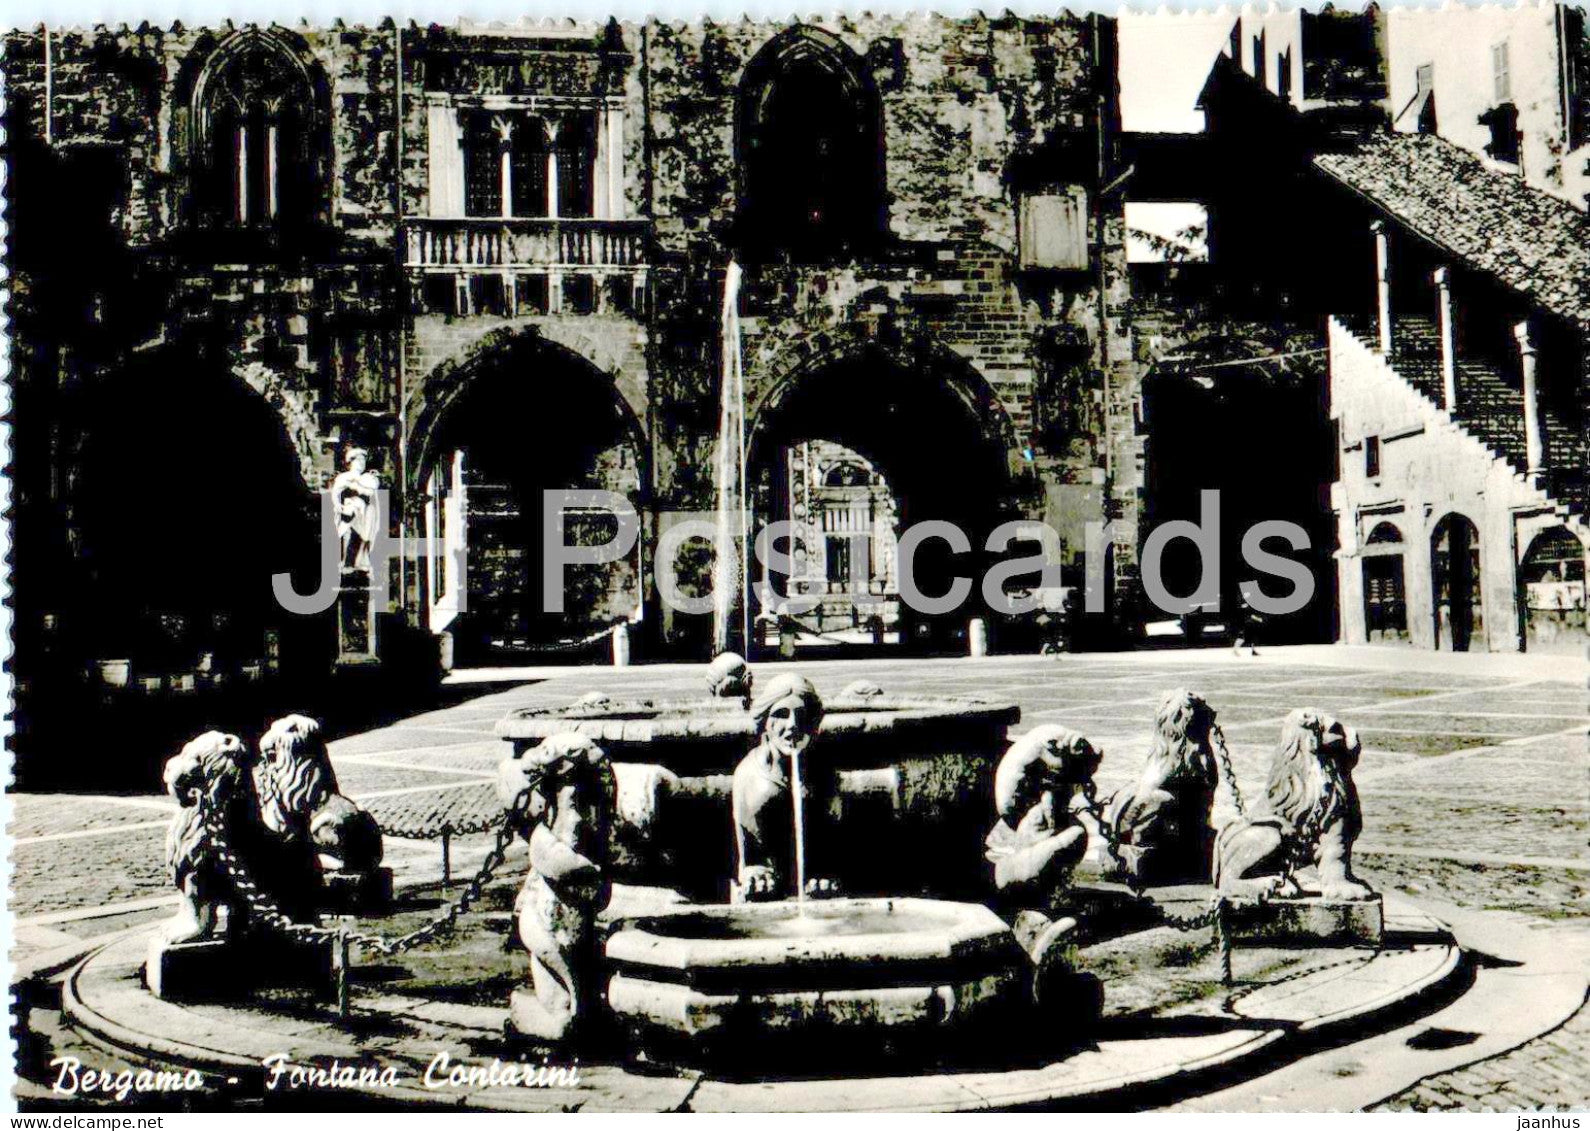 Bergamo - Fontana Contarini - fountain - old postcard - 1955 - Italy - used - JH Postcards